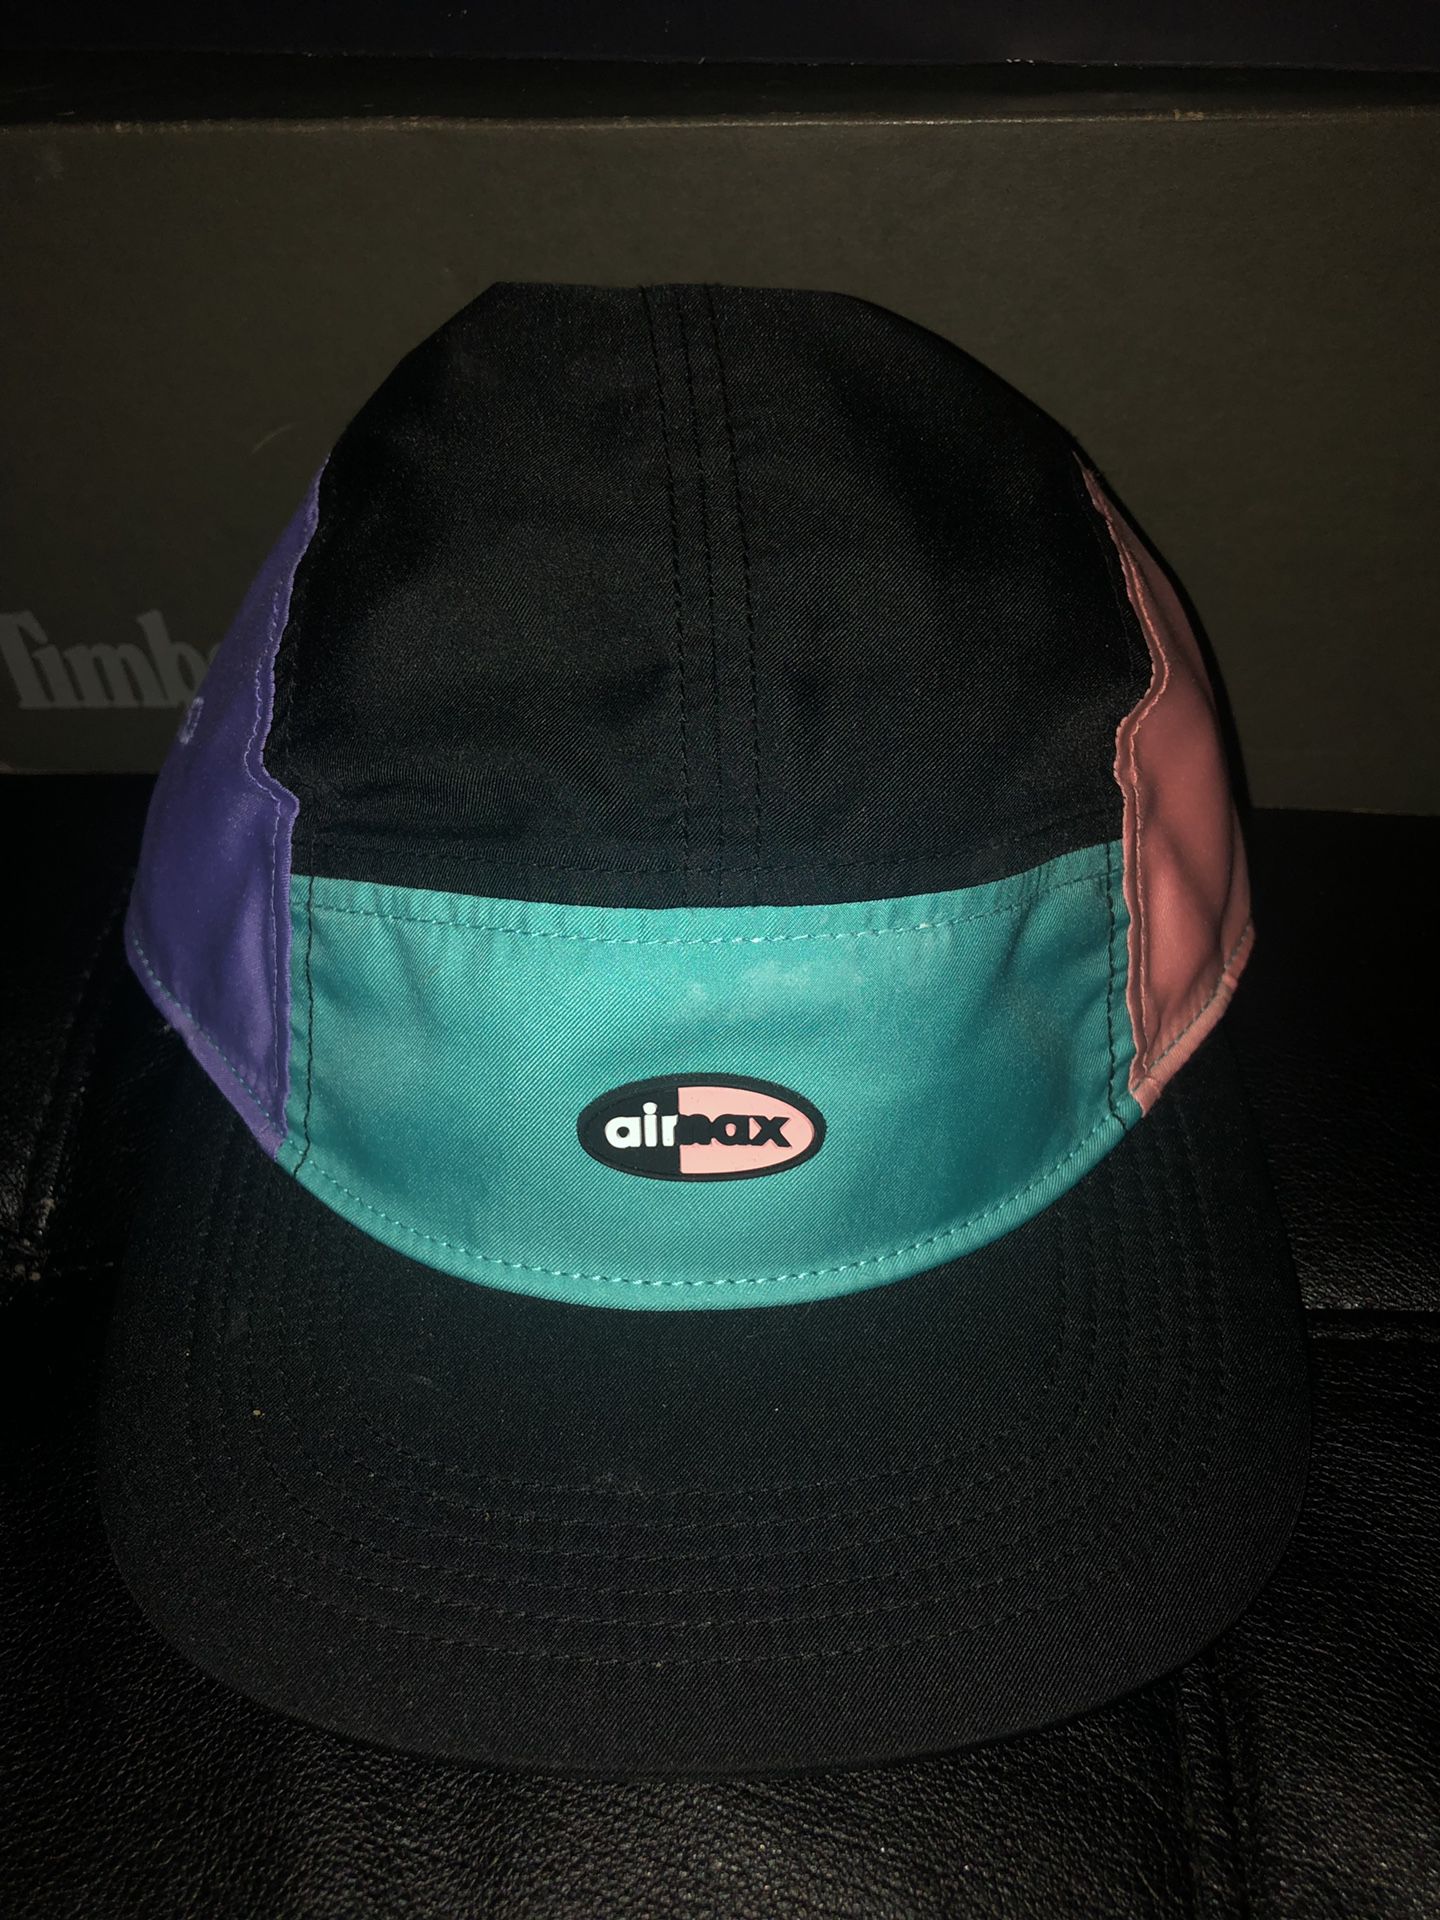 Nike air max hat pink/turquoise/purple/black